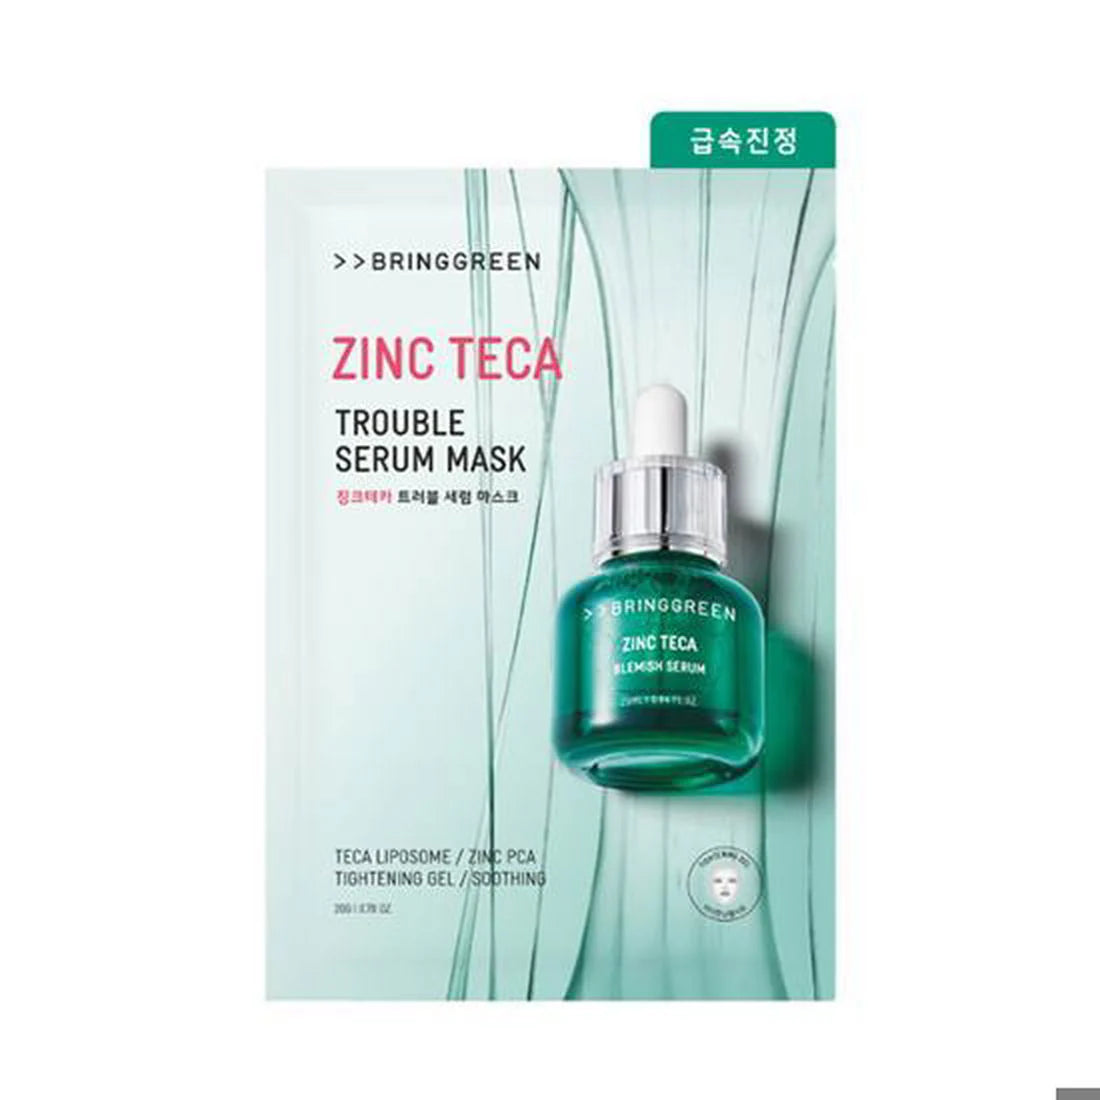 Bring Green Zinc Teca Trouble Serum Mask